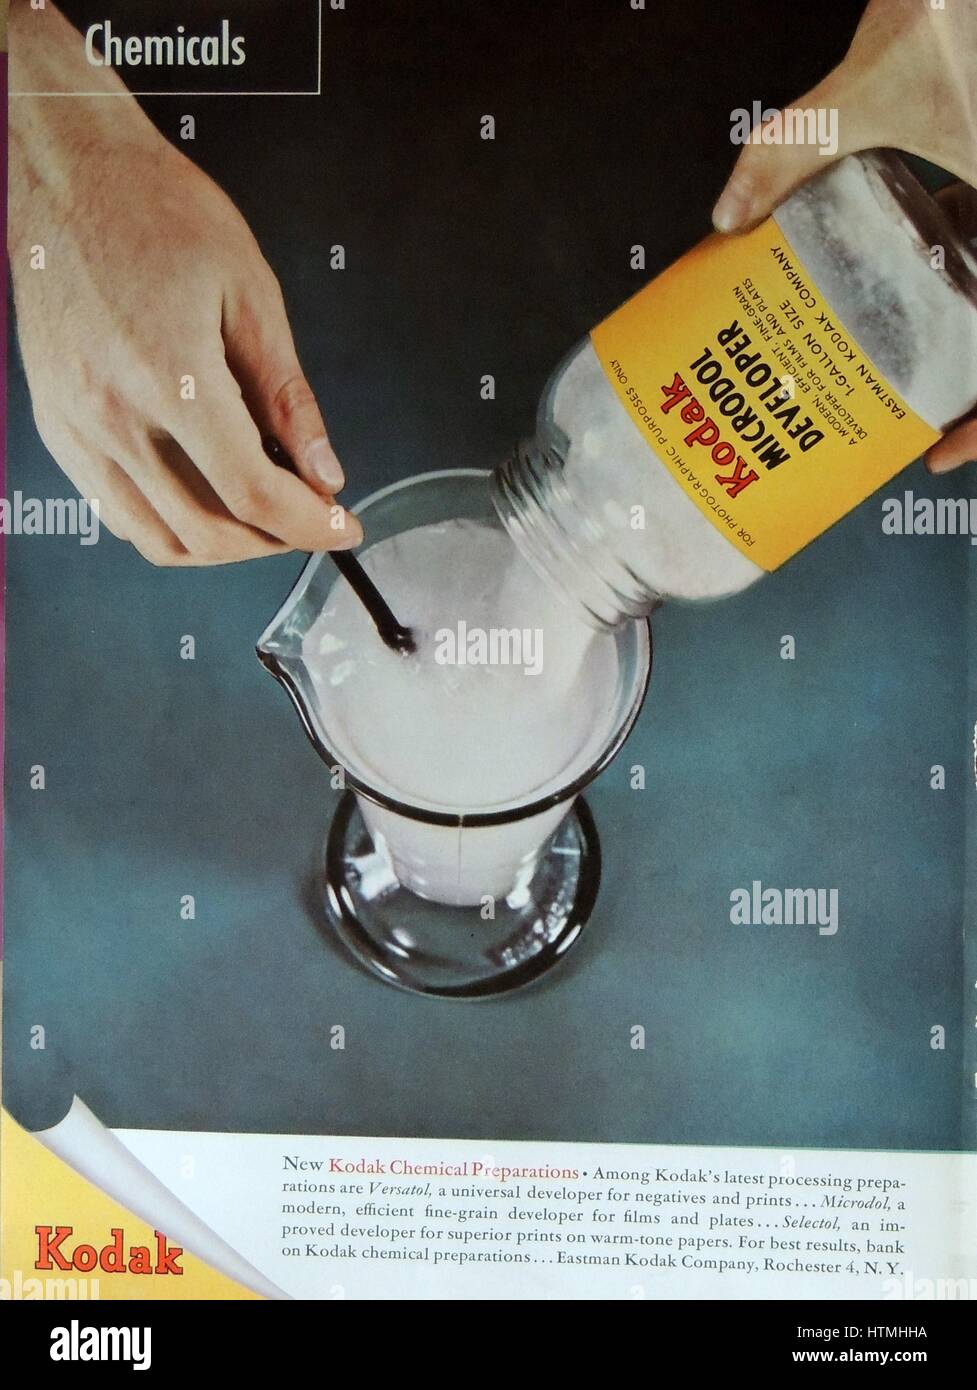 World War II - Kodak advertisement - New Kodak Chemical Preparations, Microdol Developer, a modern, efficient, fine-grain developer for films and plates. Stock Photo